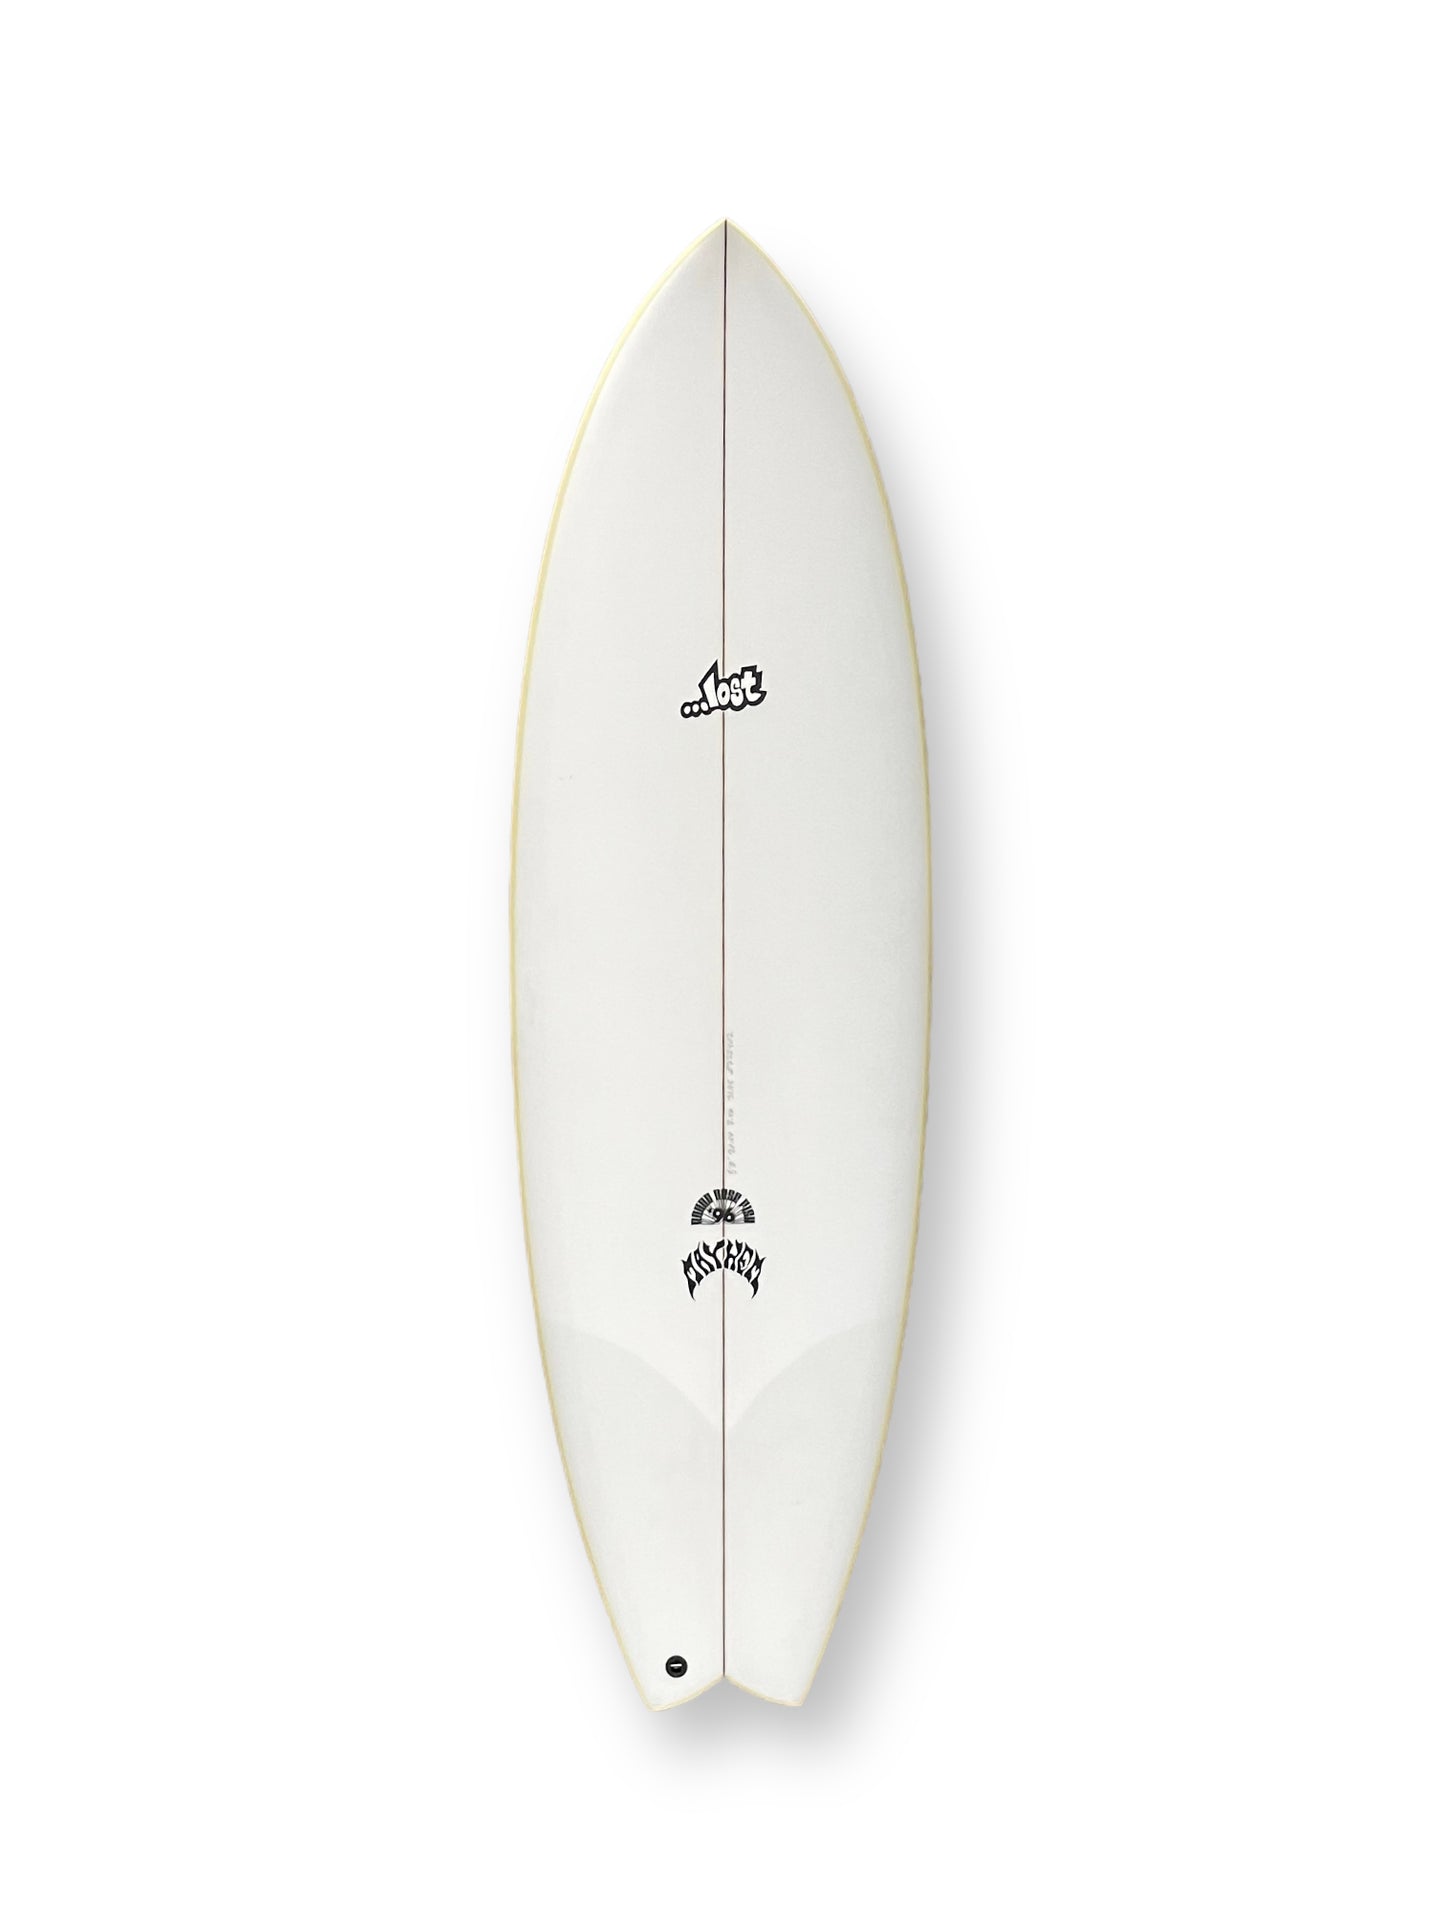 LOST MAYHEM '96 RNF 5'8" SURFBOARD